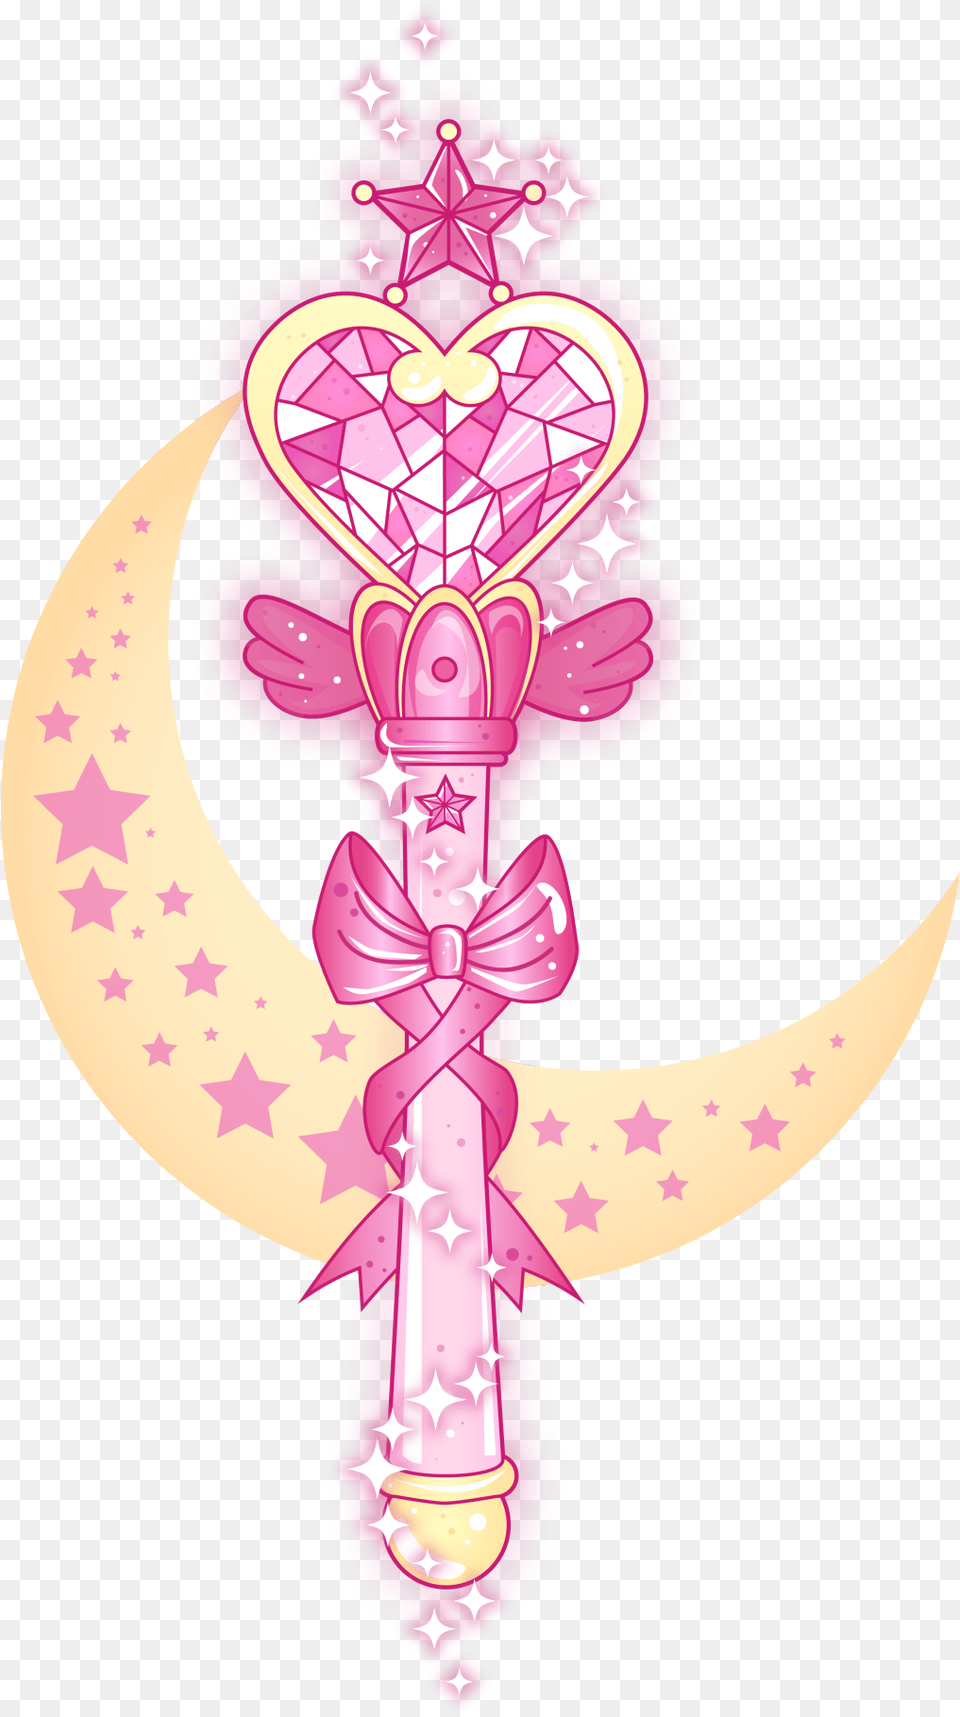 Made Another U0027fight Like A Mahou Shoujou0027 Piece Sailor Sailor Chibi Moon Wand, Art, Graphics, Purple, Flower Png